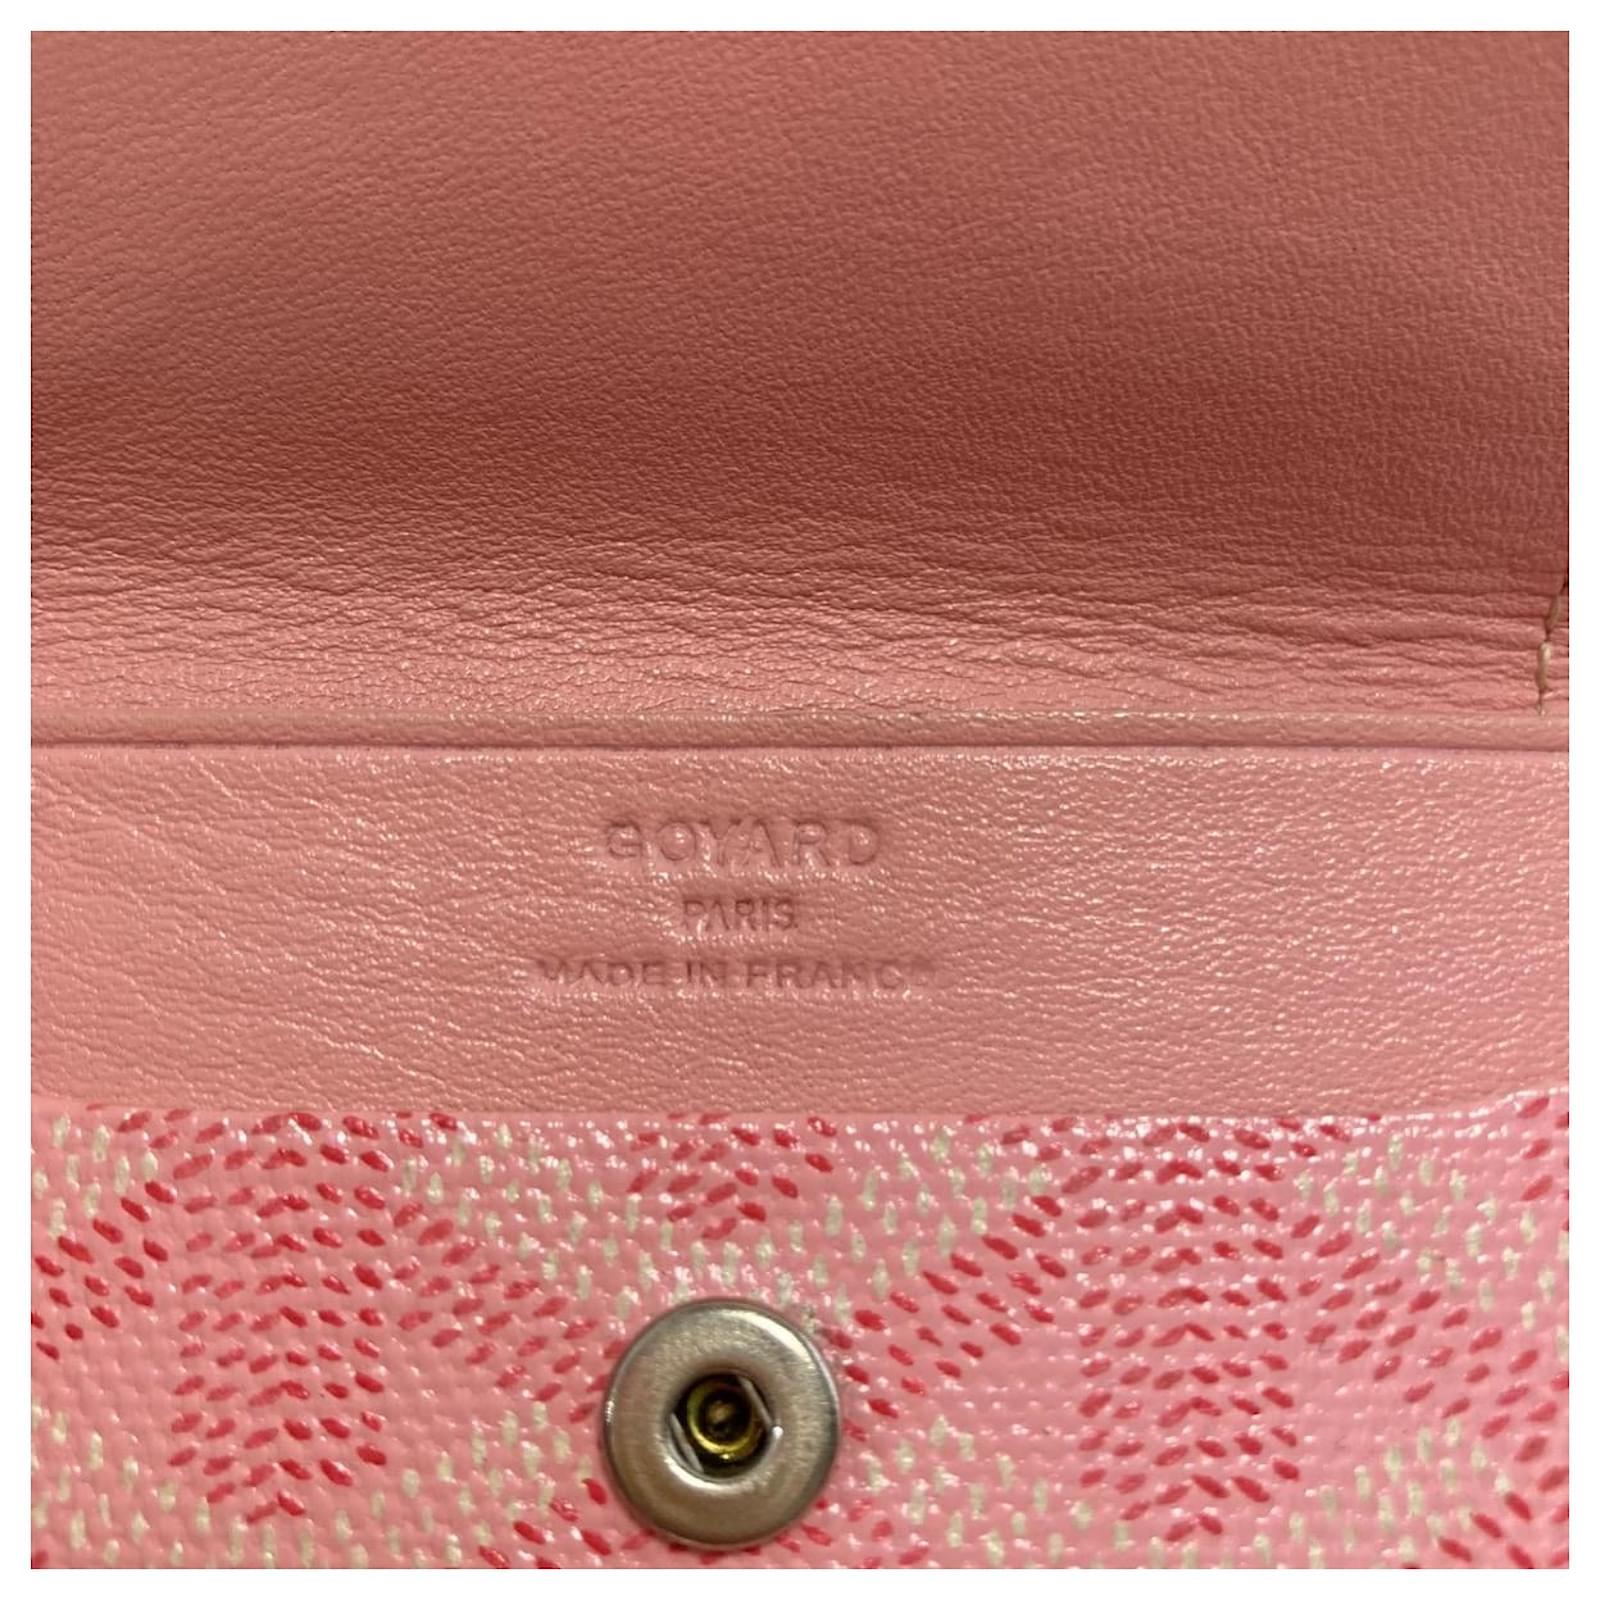 Pink goyard wallet , #wallet #pink #goyard #fashion